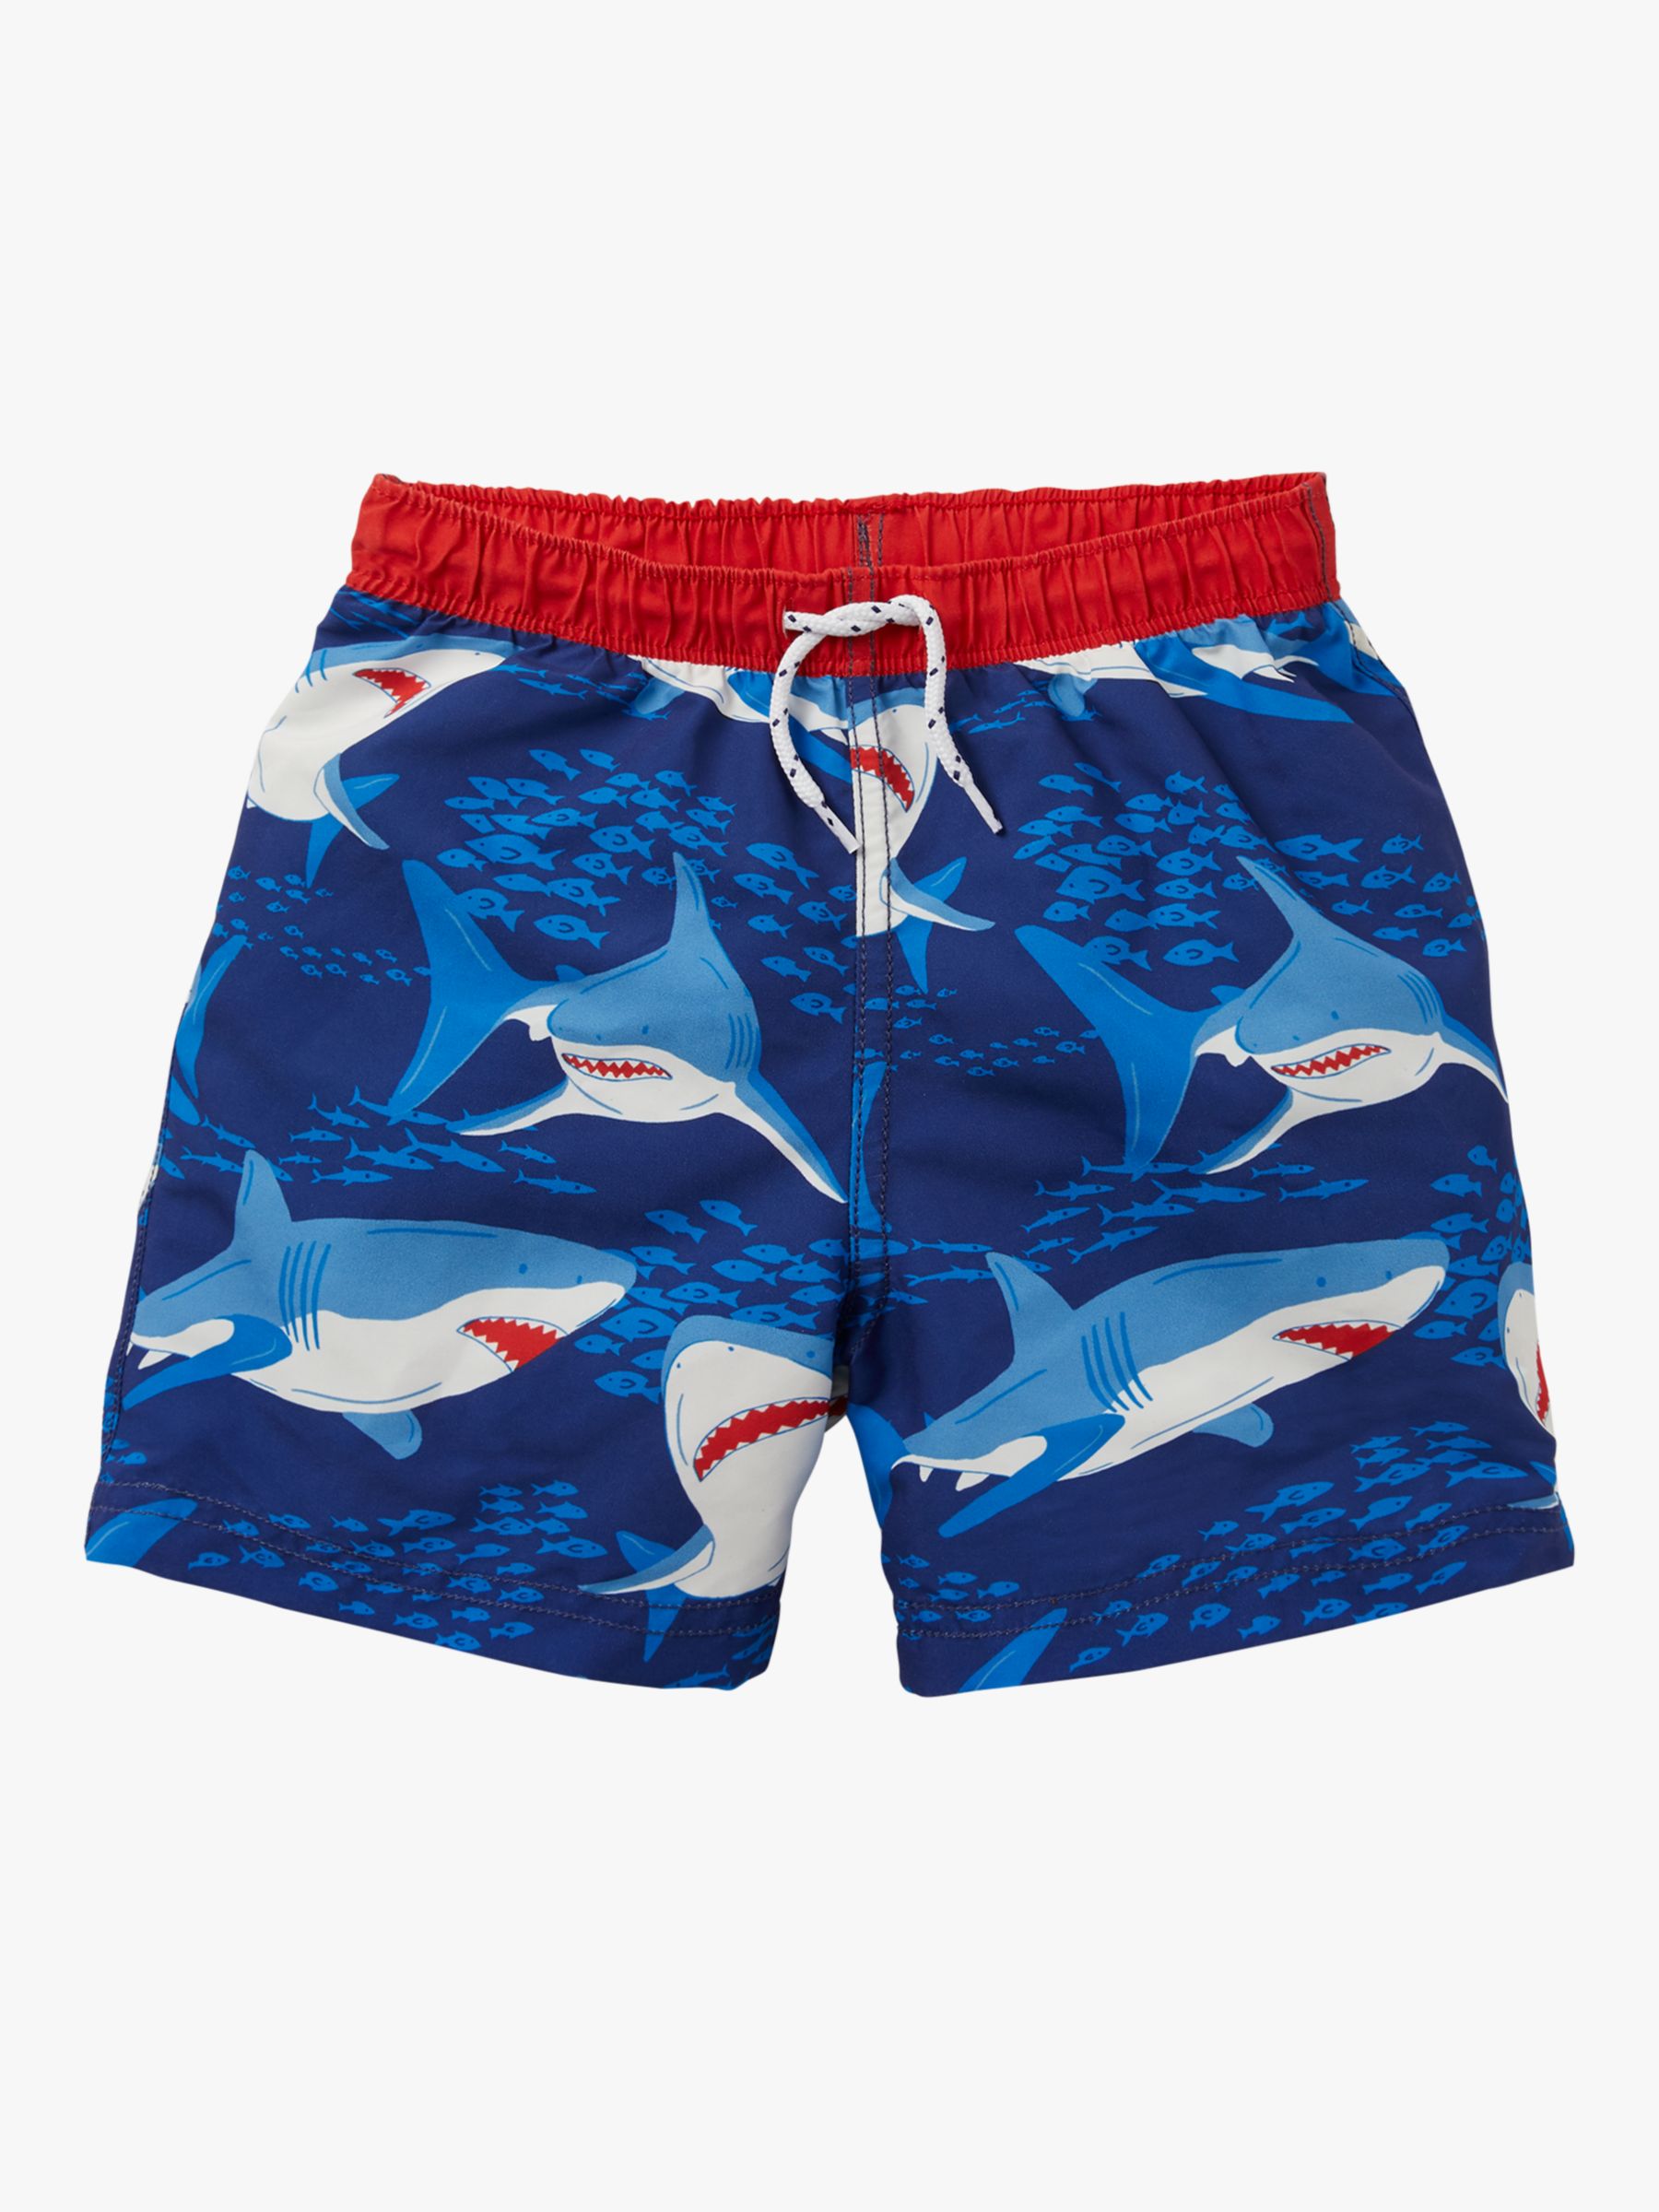 Mini Boden Kids' Shark School Bather Swimming Shorts, Starboard Blue